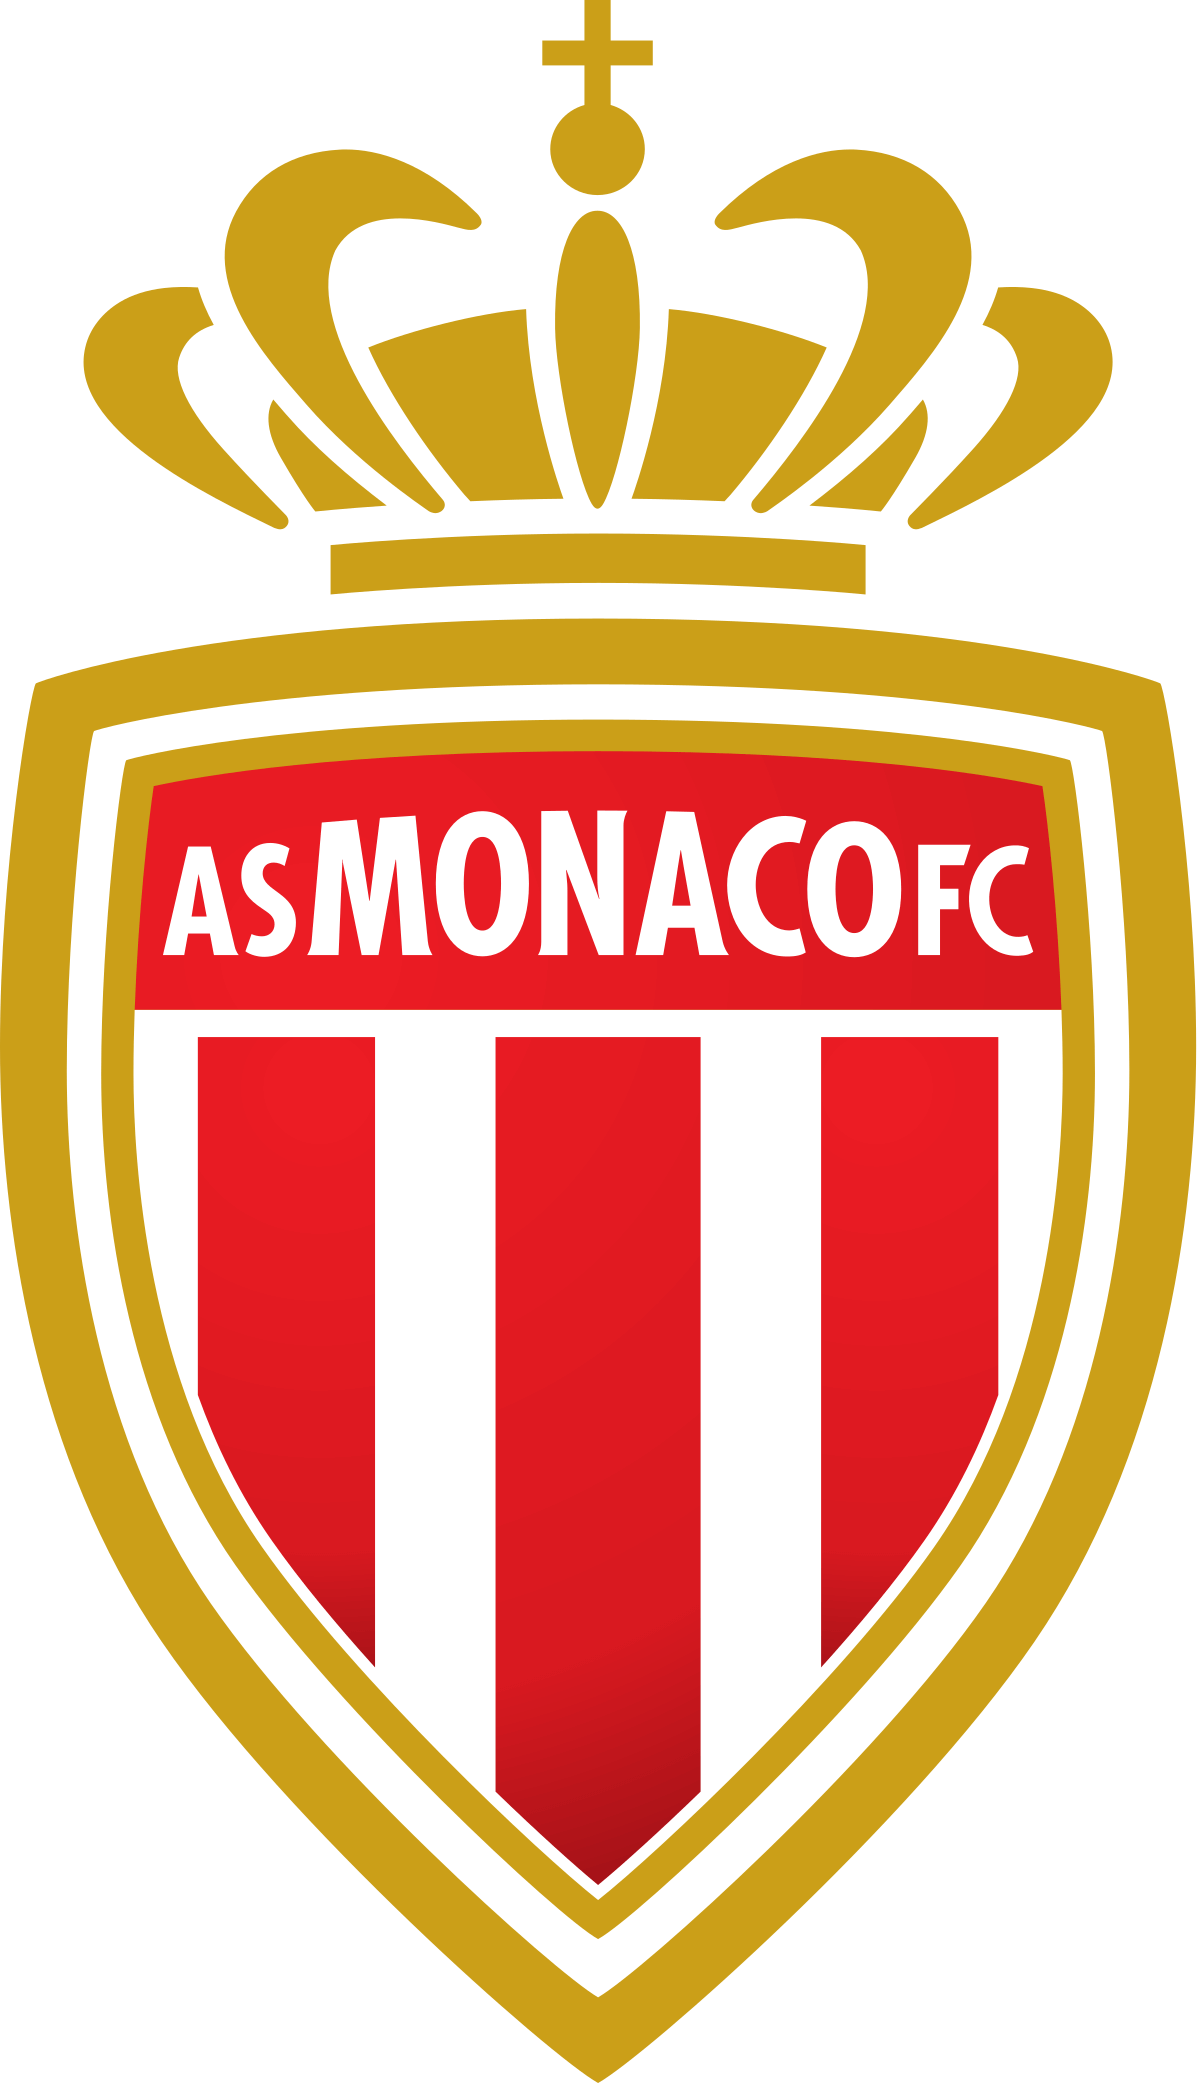 Paris 2018 Logo - Paris Saint Germain Vs AS Monaco 21 04 2019. Football Ticket Net